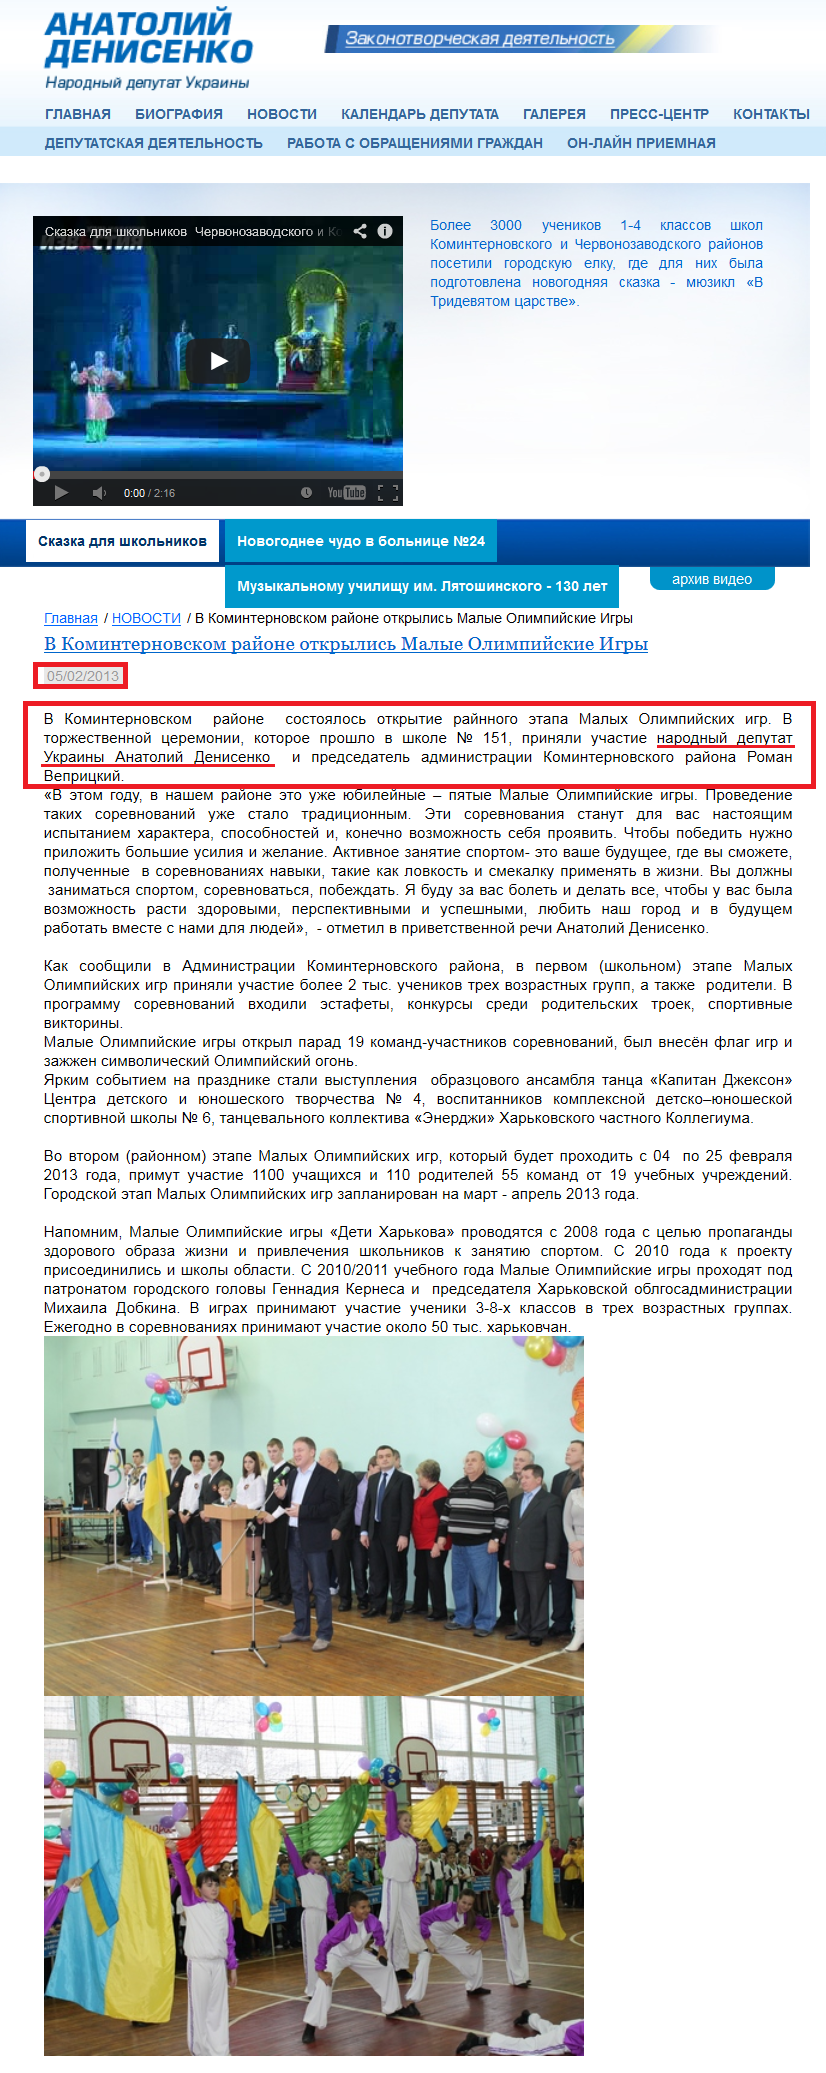 http://denisenko.kharkov.ua/news/430-11-03-13.html